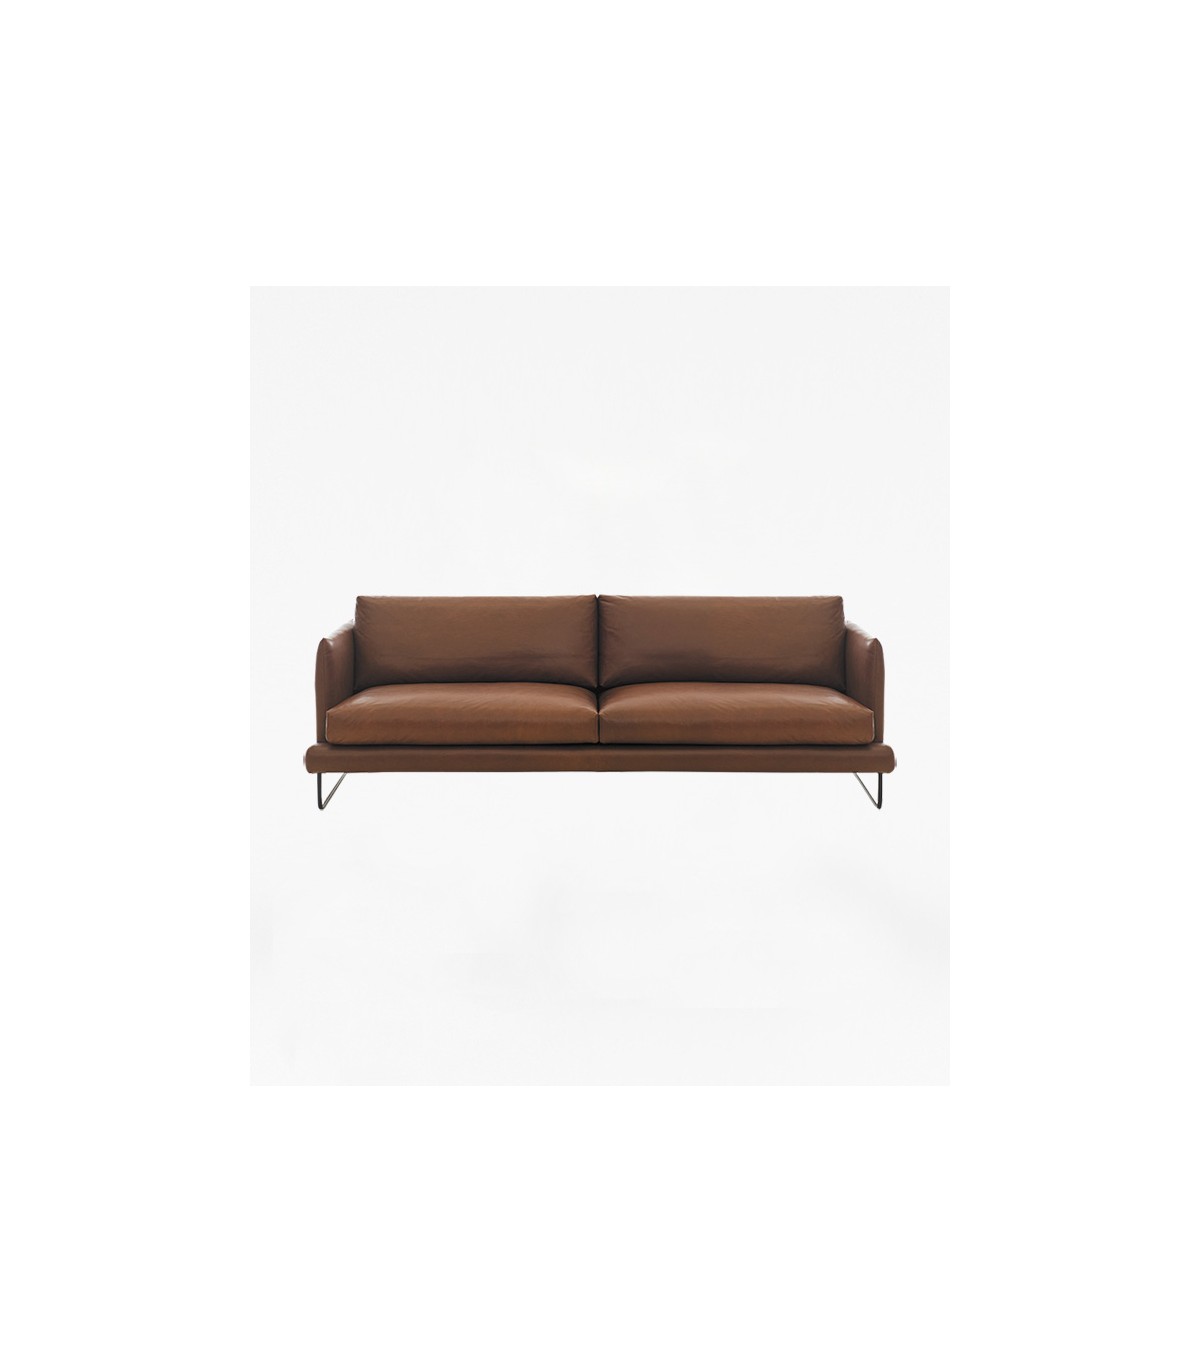 Misbrug Surrey Tegne Captain Leather Sofa - Italian High Quality Full Grain Leather